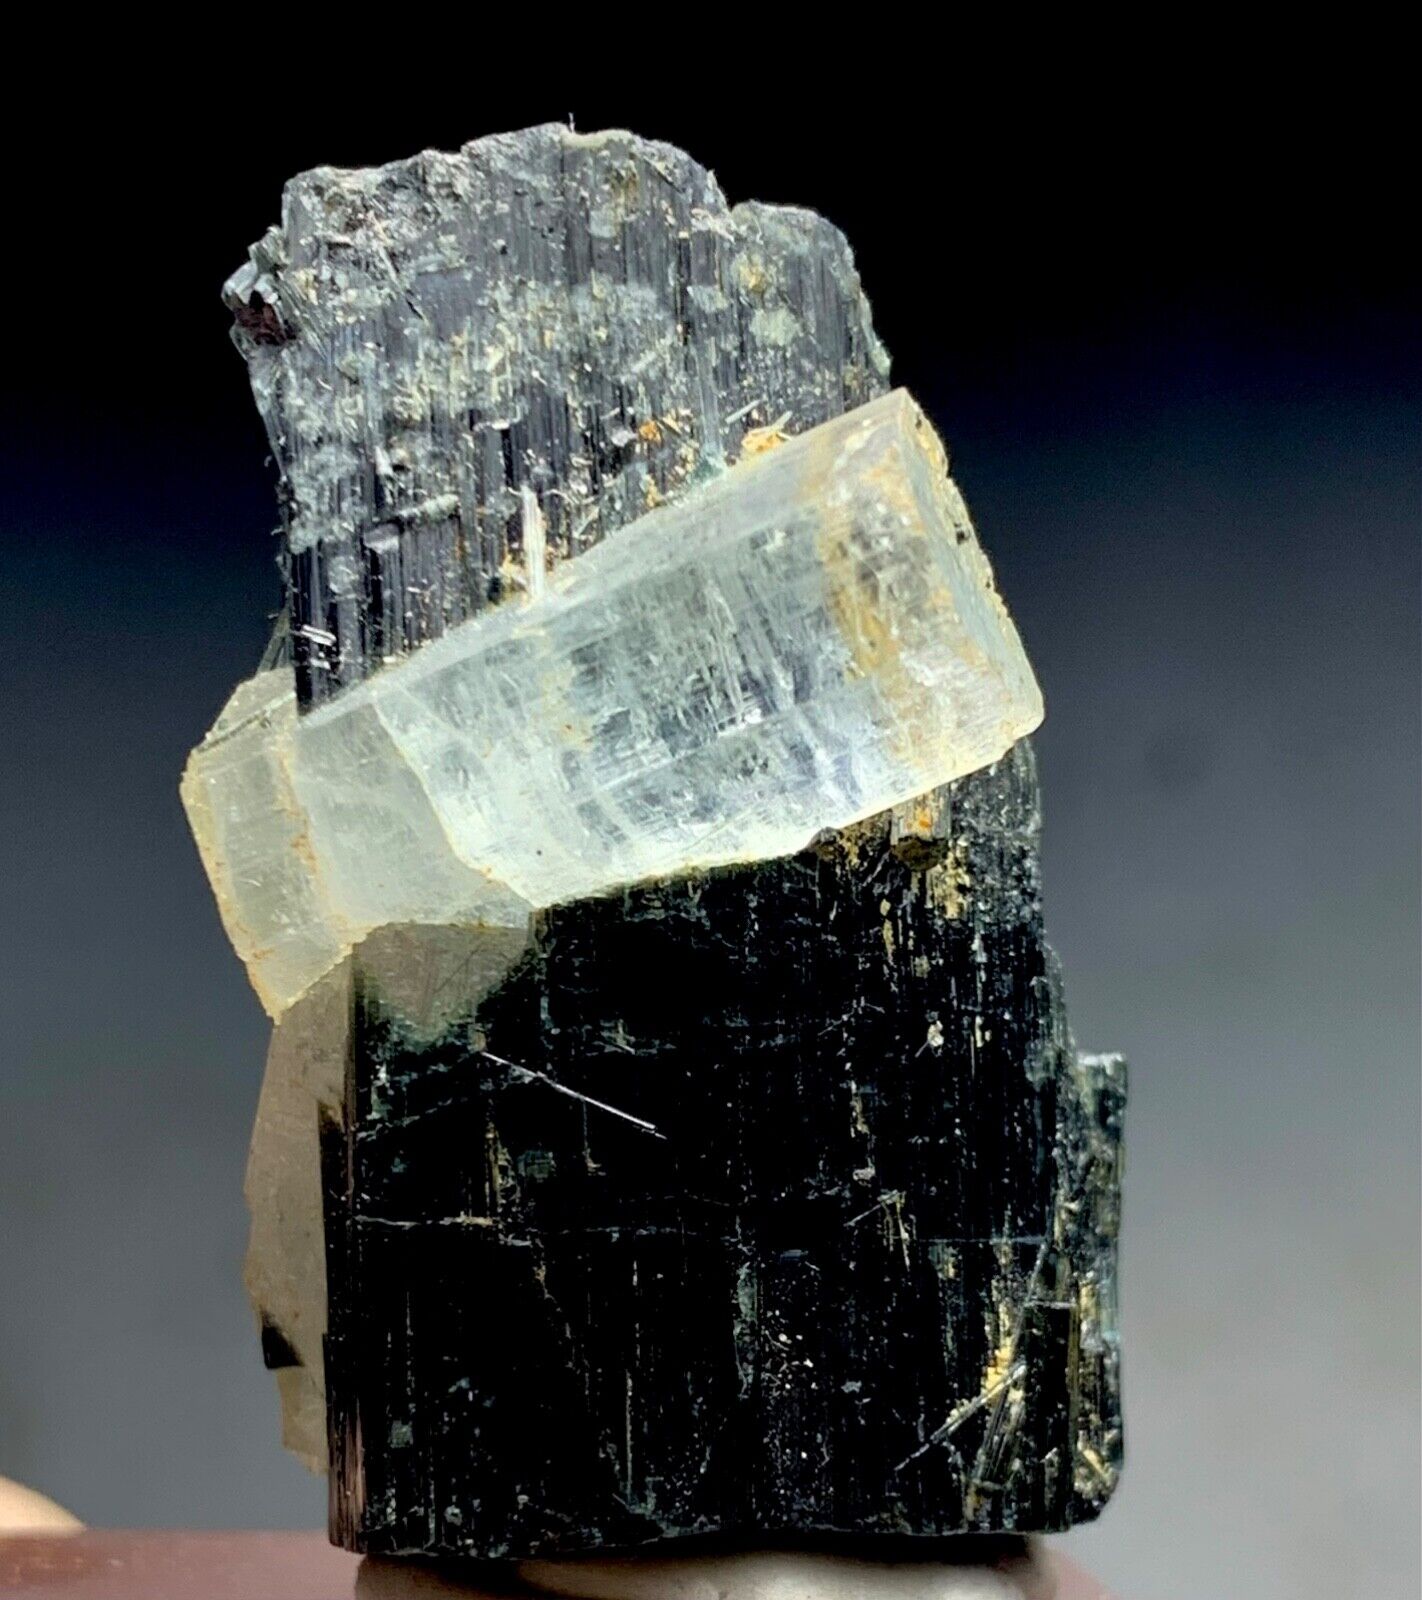 66 Carat Aquamarine Crystal Specimen from Pakistan